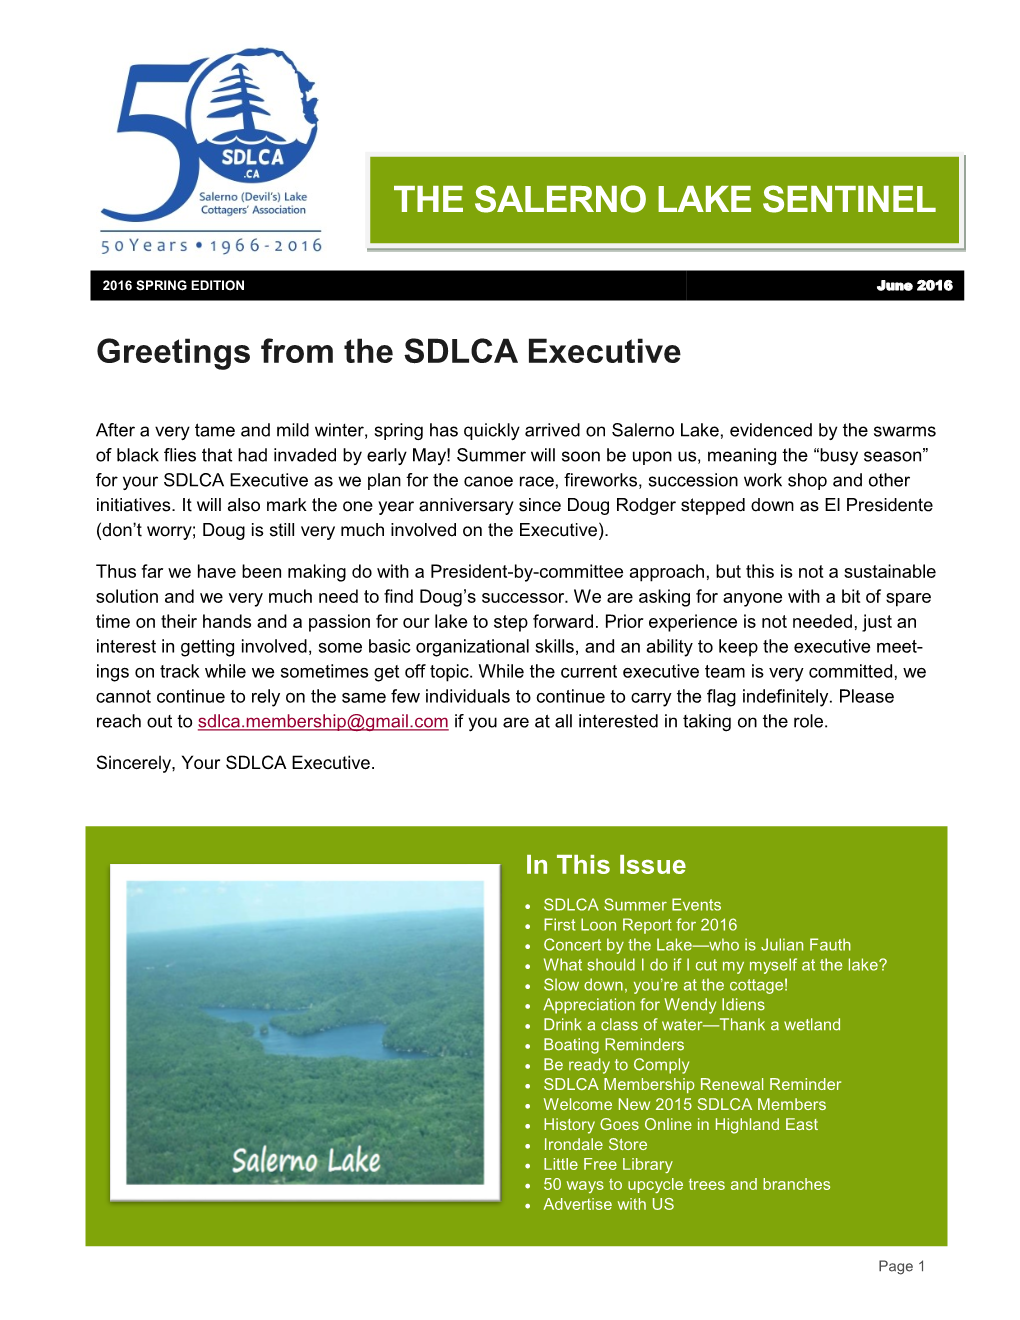 The Salerno Lake Sentinel